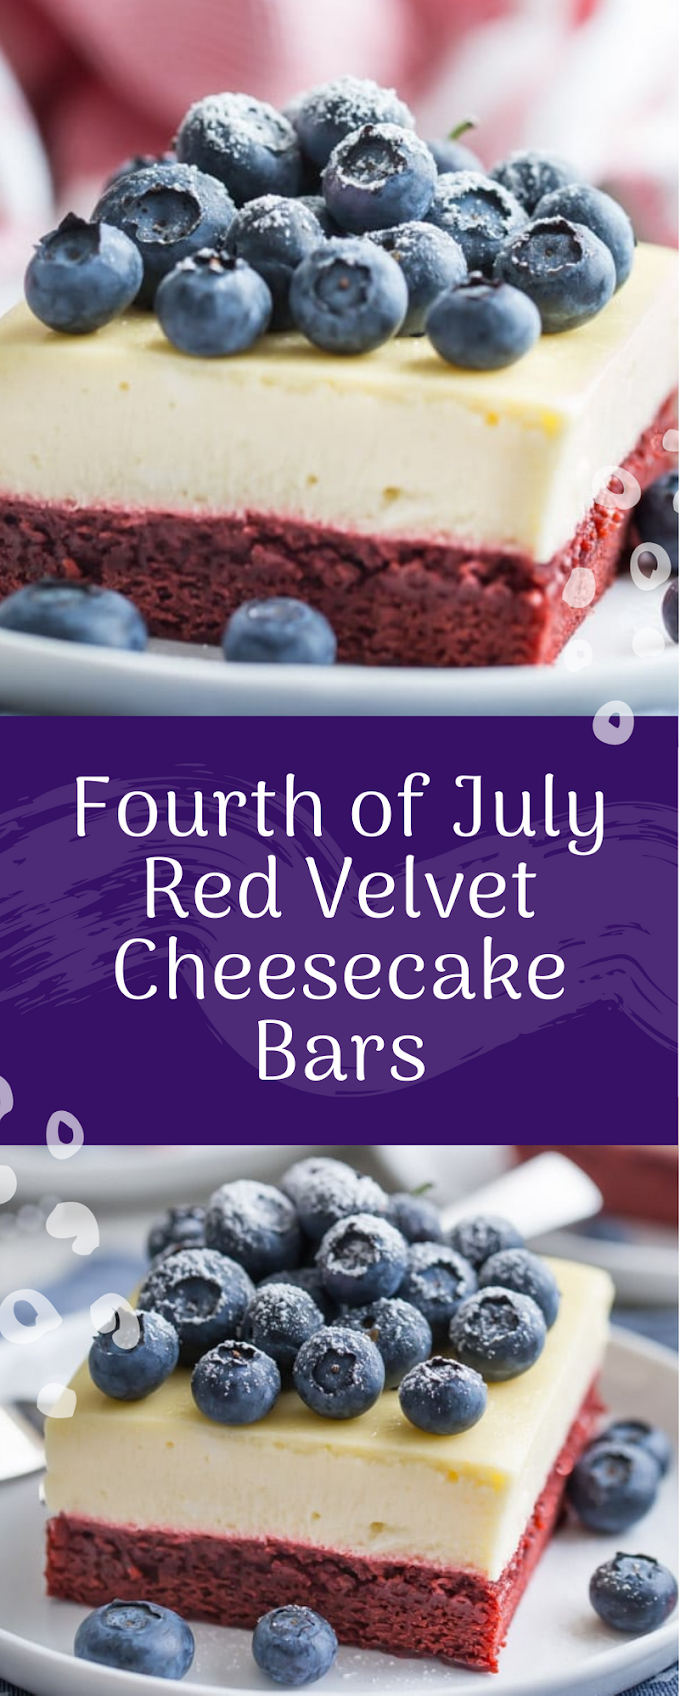 Fourth of July Red Velvet Cheesecake Bars